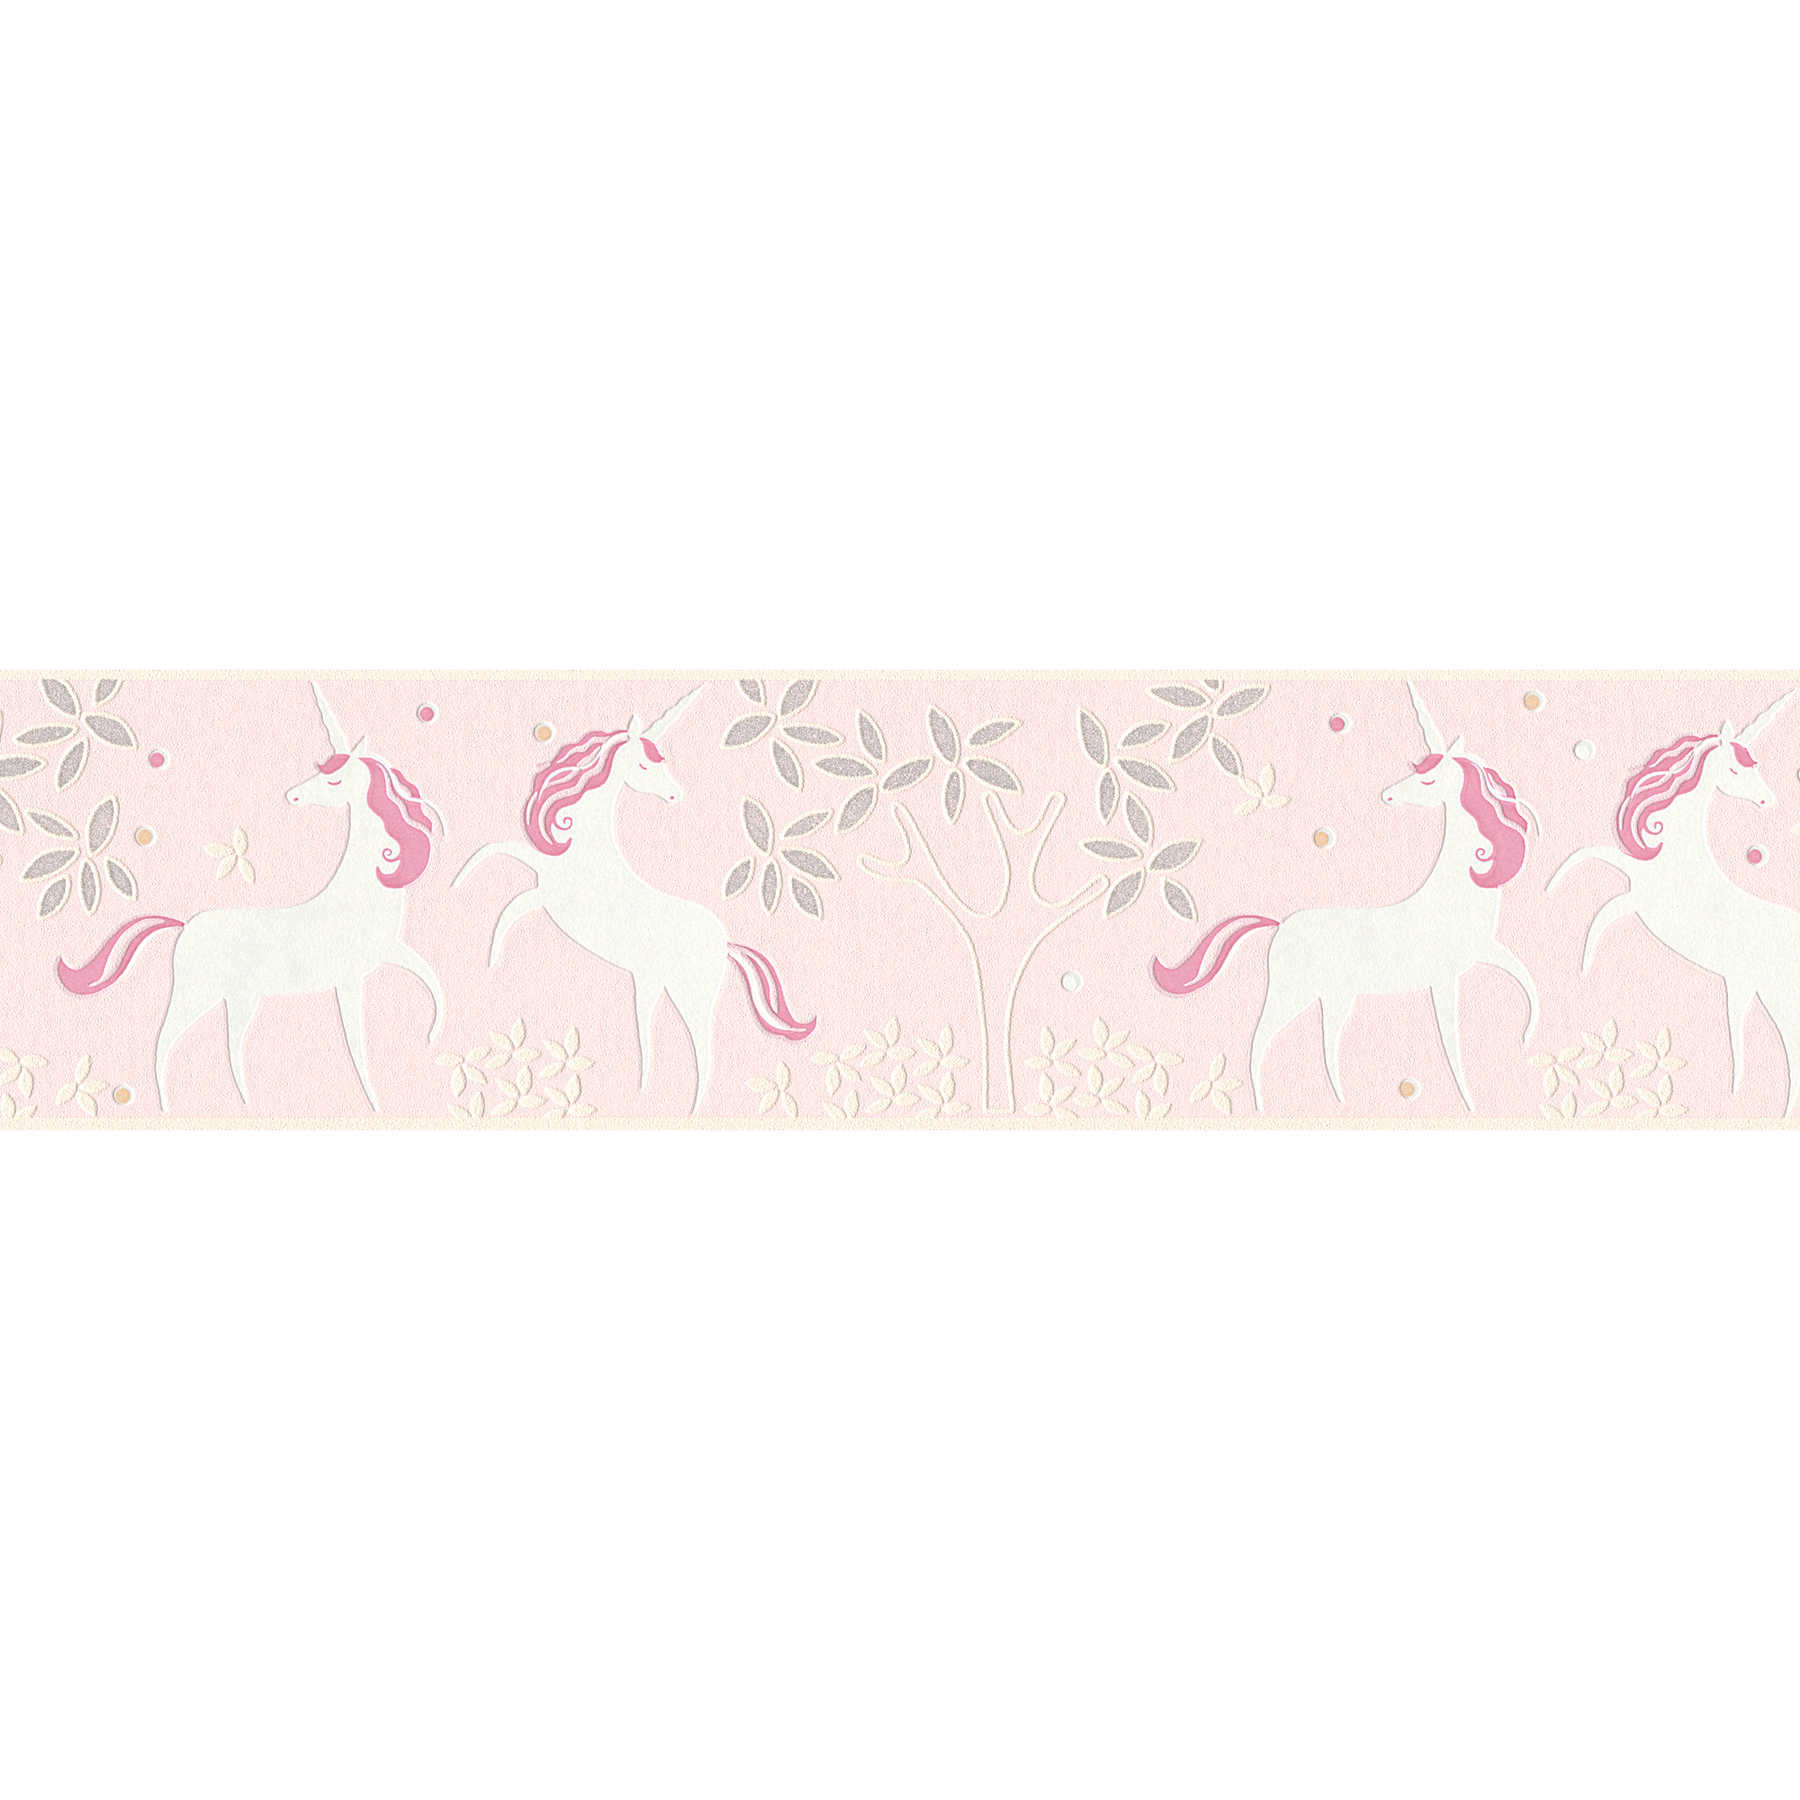 Pink unicorn border fleece for girls room - pink, silver
